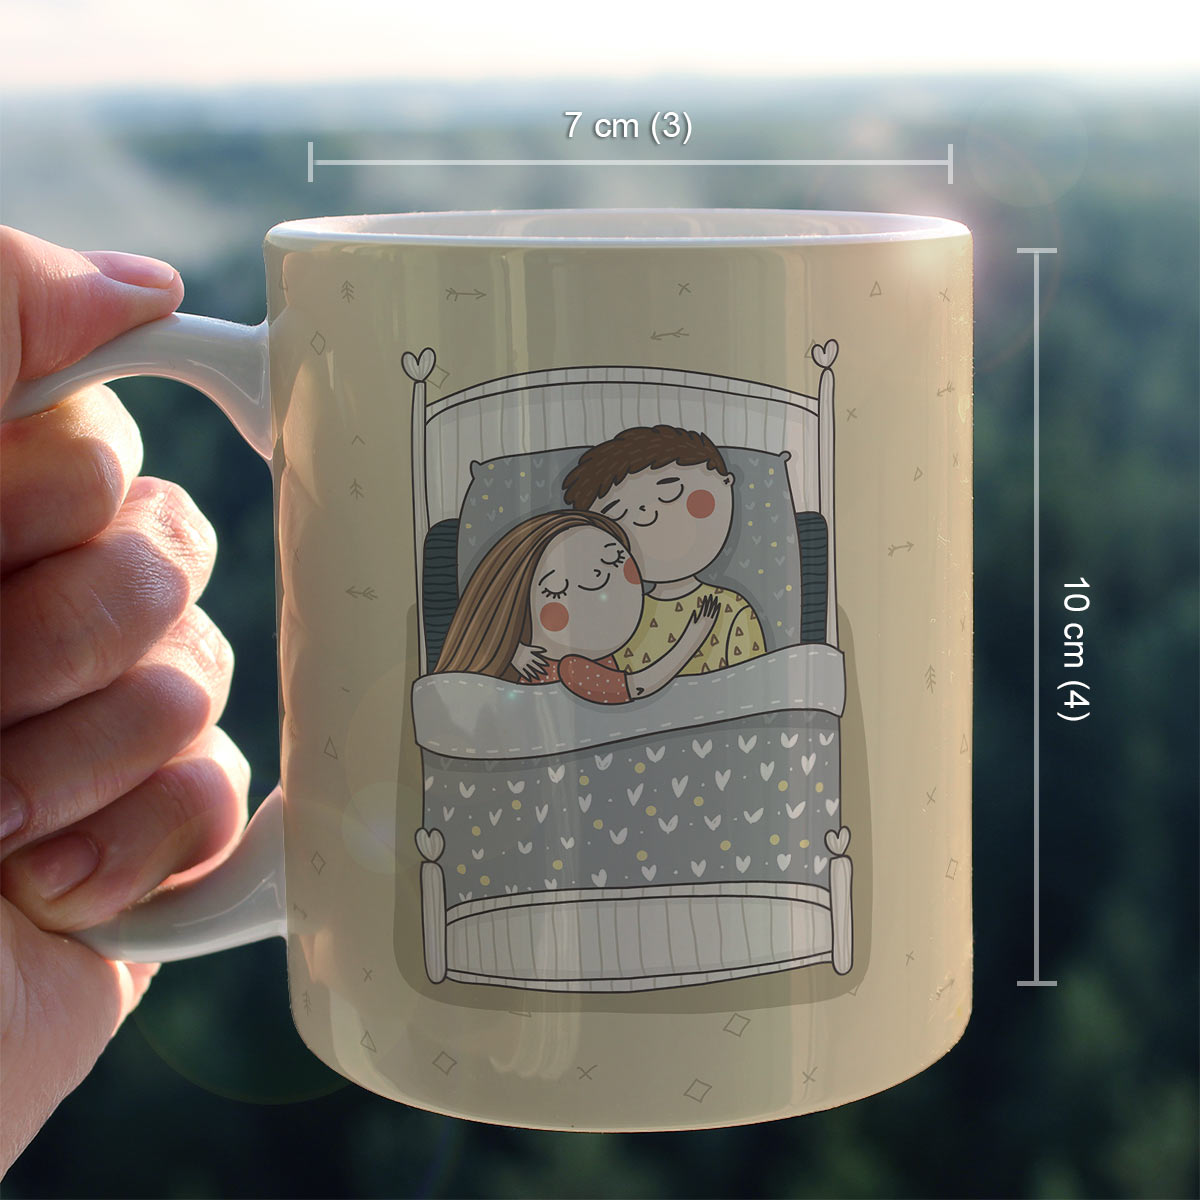 Sweet Dream Ceramic Mug